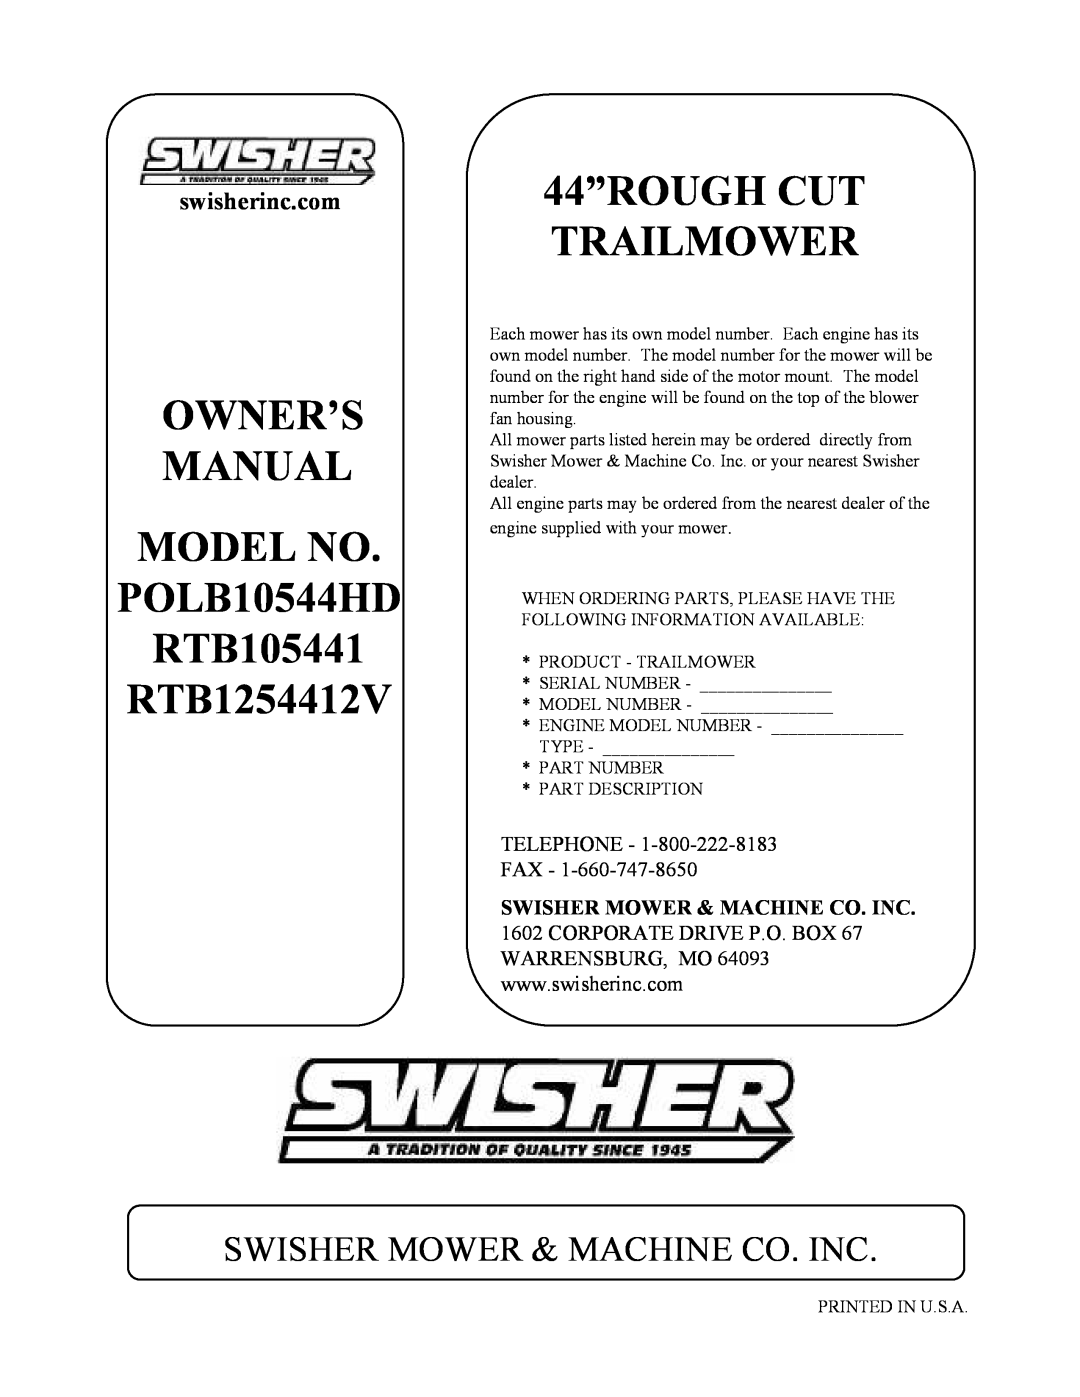 Swisher RTB1254412V, POLB10544HD, RTB105441 owner manual 44”ROUGH CUT TRAILMOWER, Swisher Mower & Machine Co. Inc 